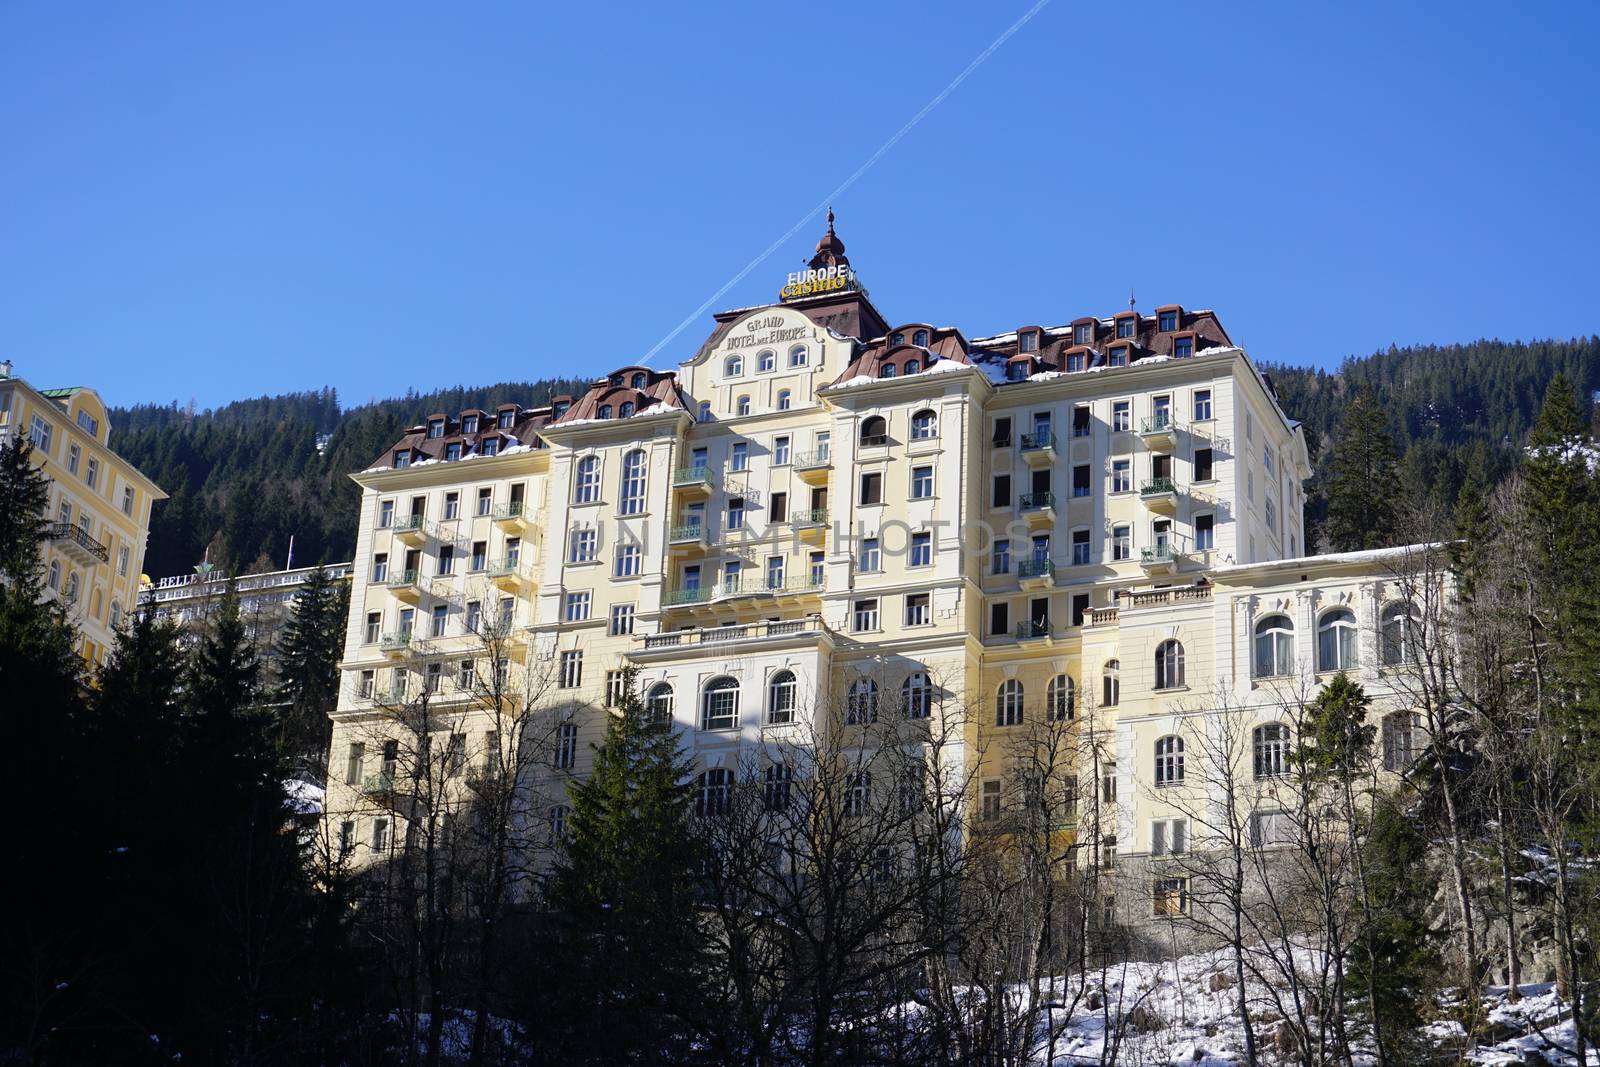 Bad Gasteian, Austria - February 2018: Gastein art nouveau hotel